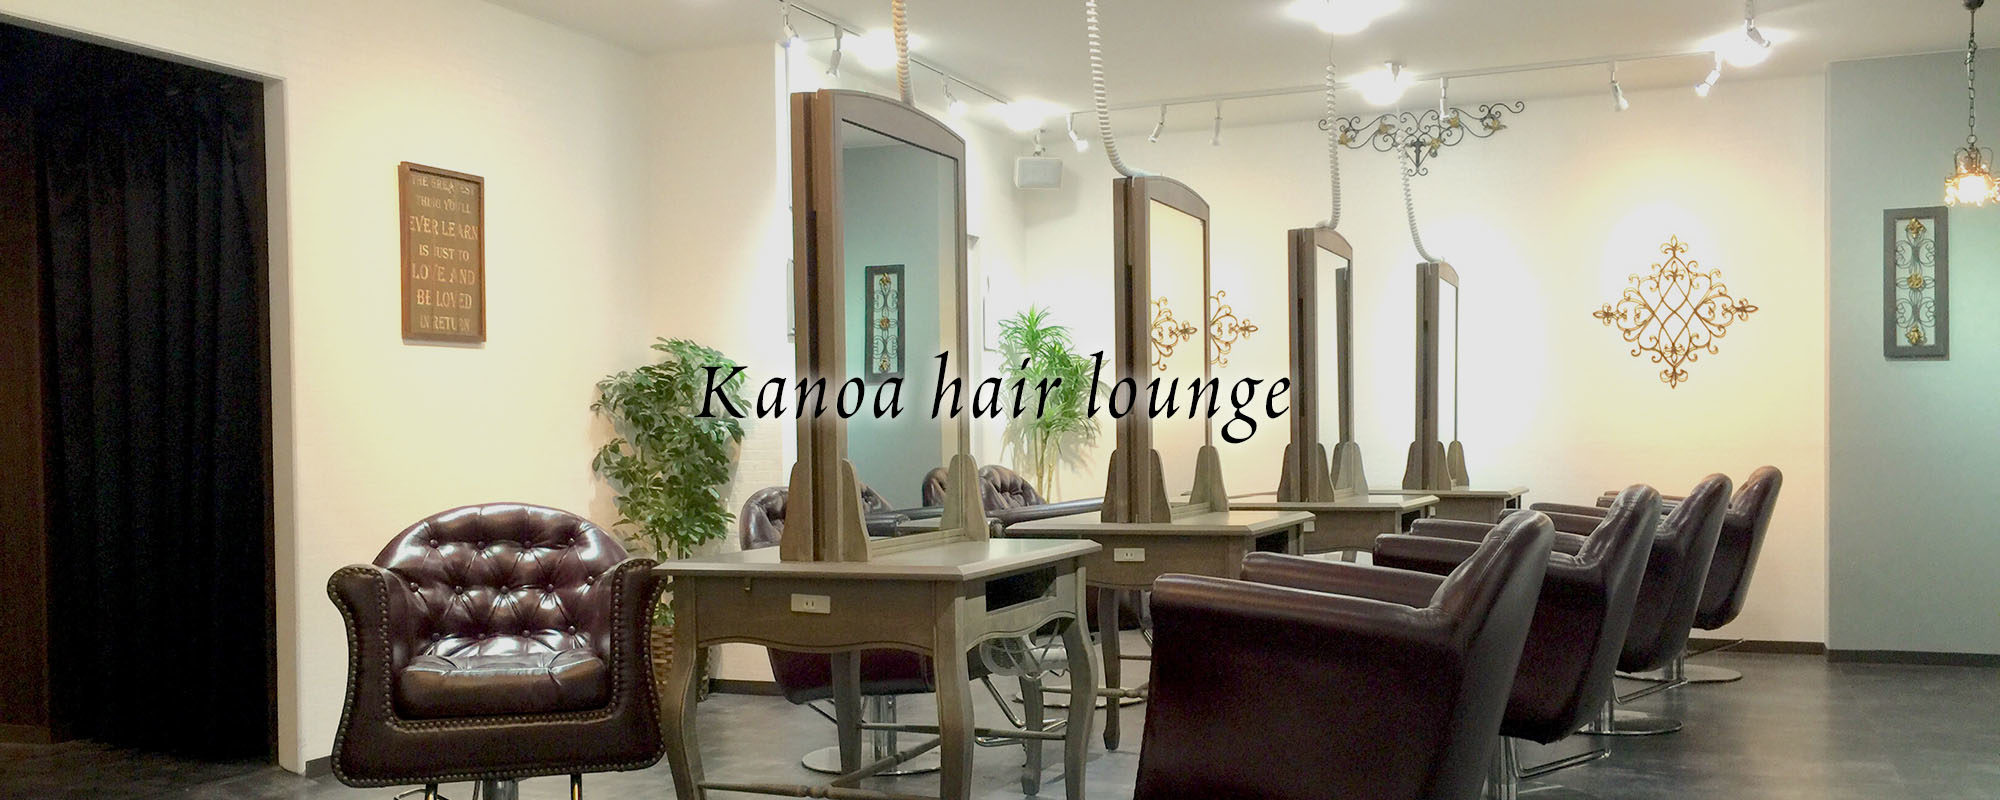 Kanoa hair lounge